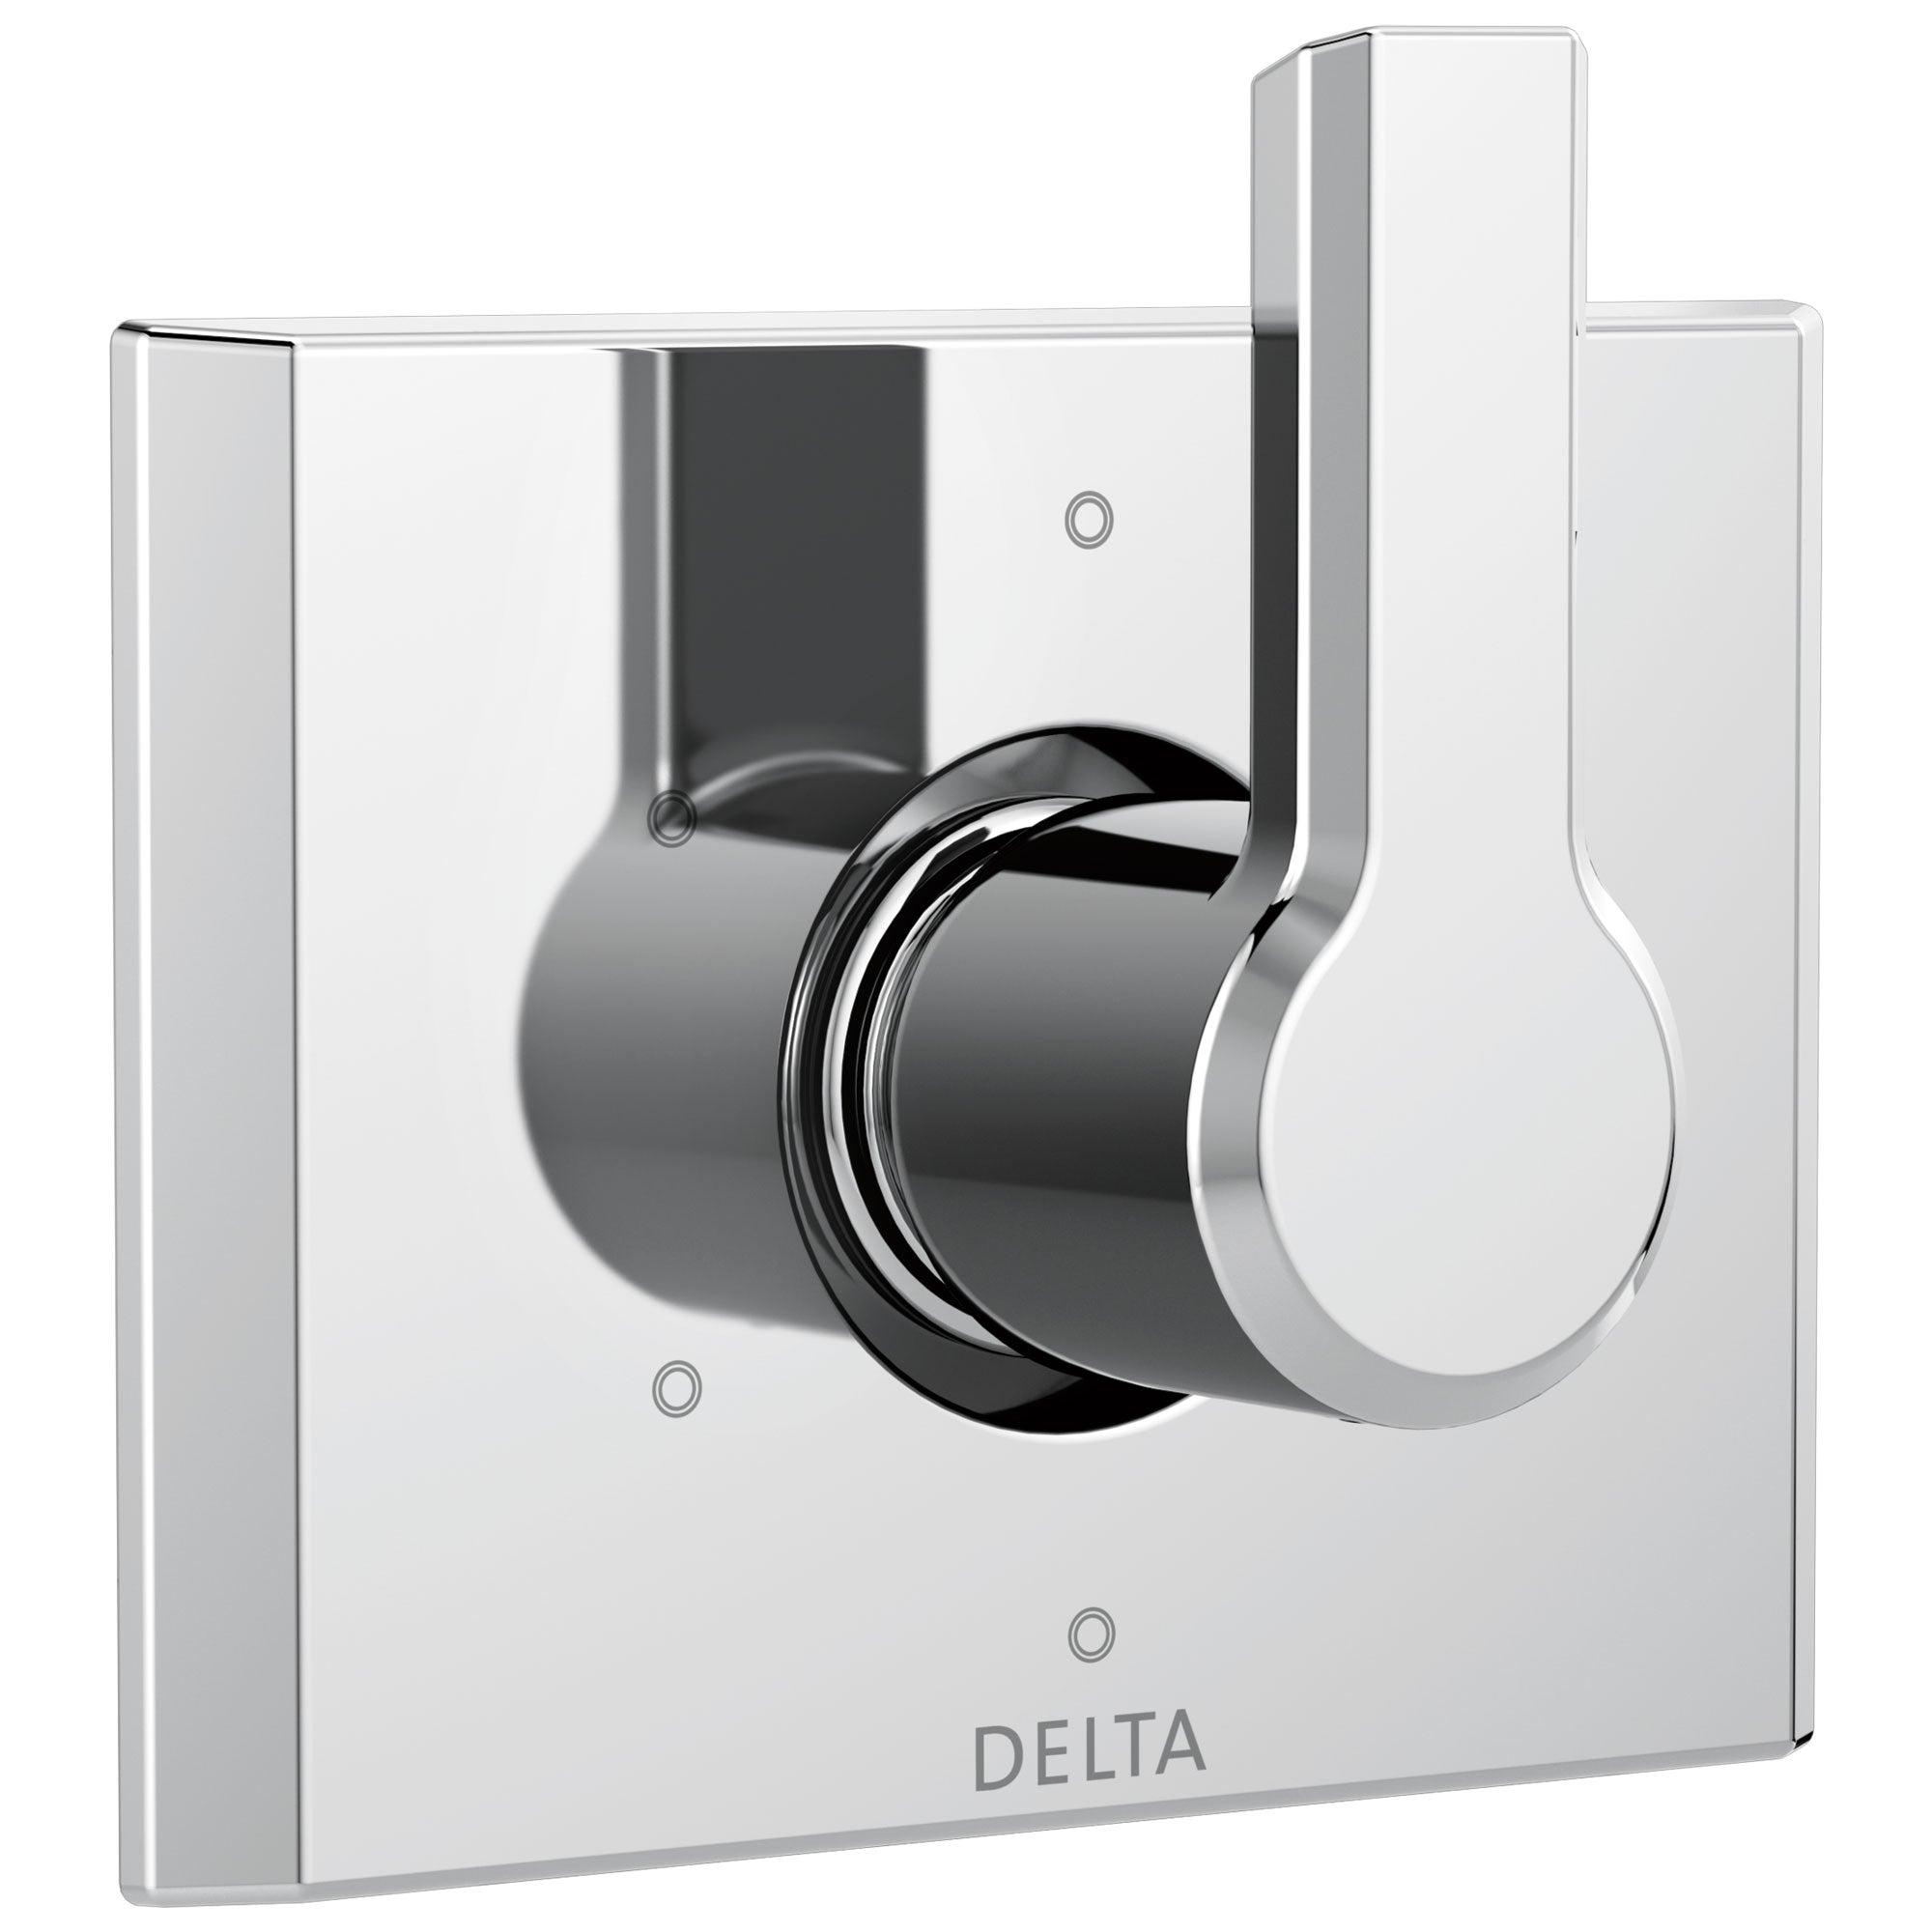 Delta Pivotal Chrome Finish 6-Setting 3-Port Shower Diverter Trim Kit (Requires Valve) DT11999